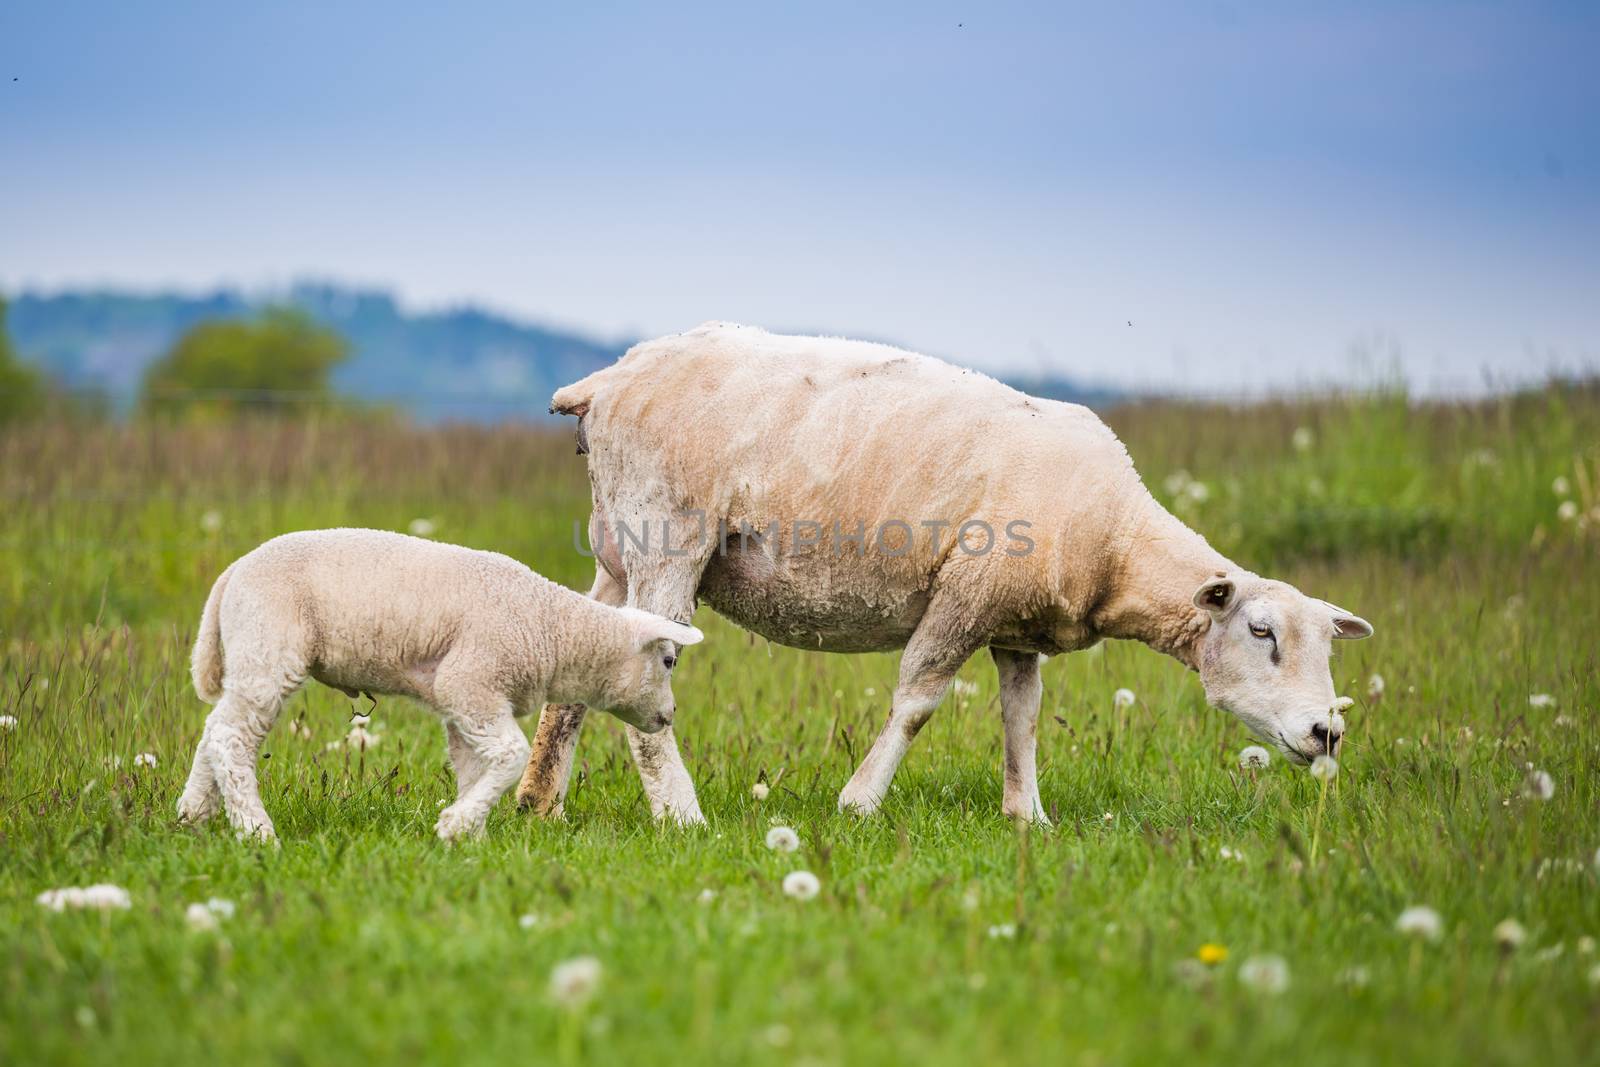 Texel ewe female sheep with newborn twin lambs in lush green meadow in Spring Time. Texel is a breed of sheep.